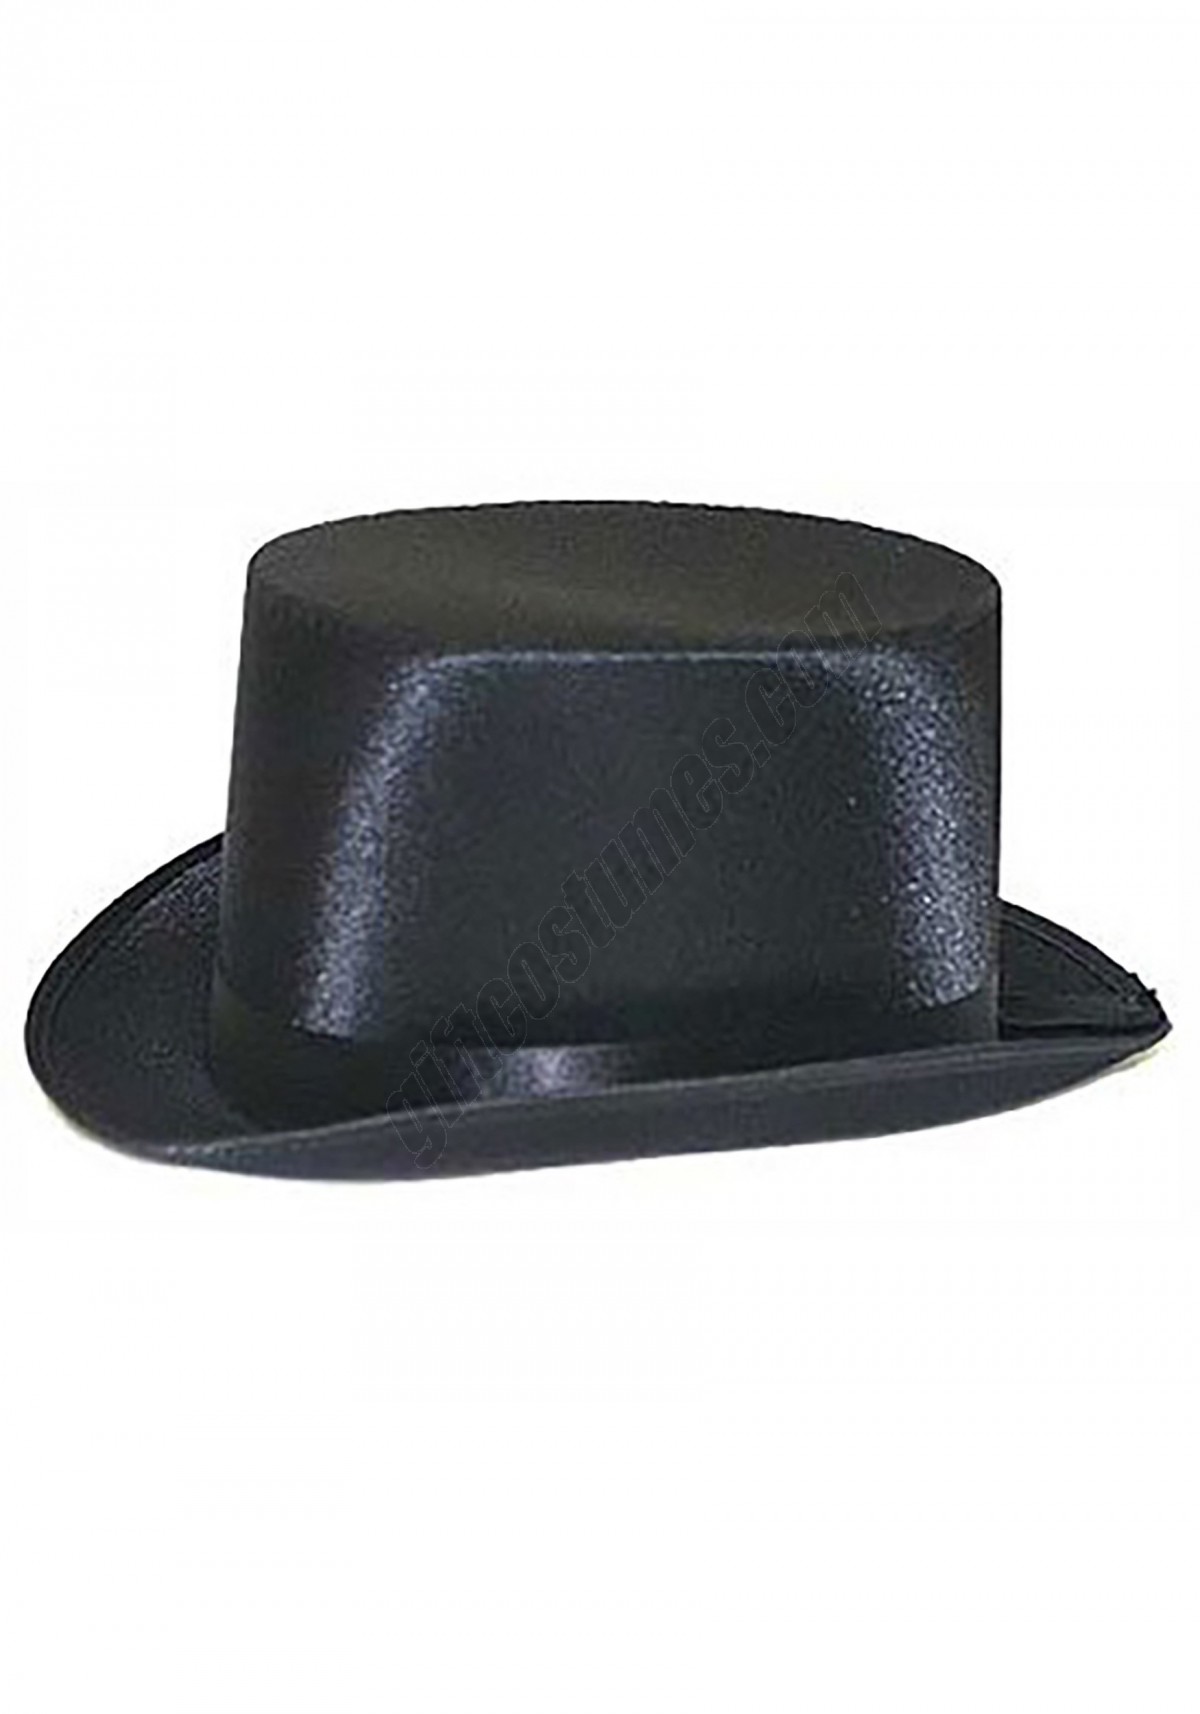 Black Top Hat Promotions - -0